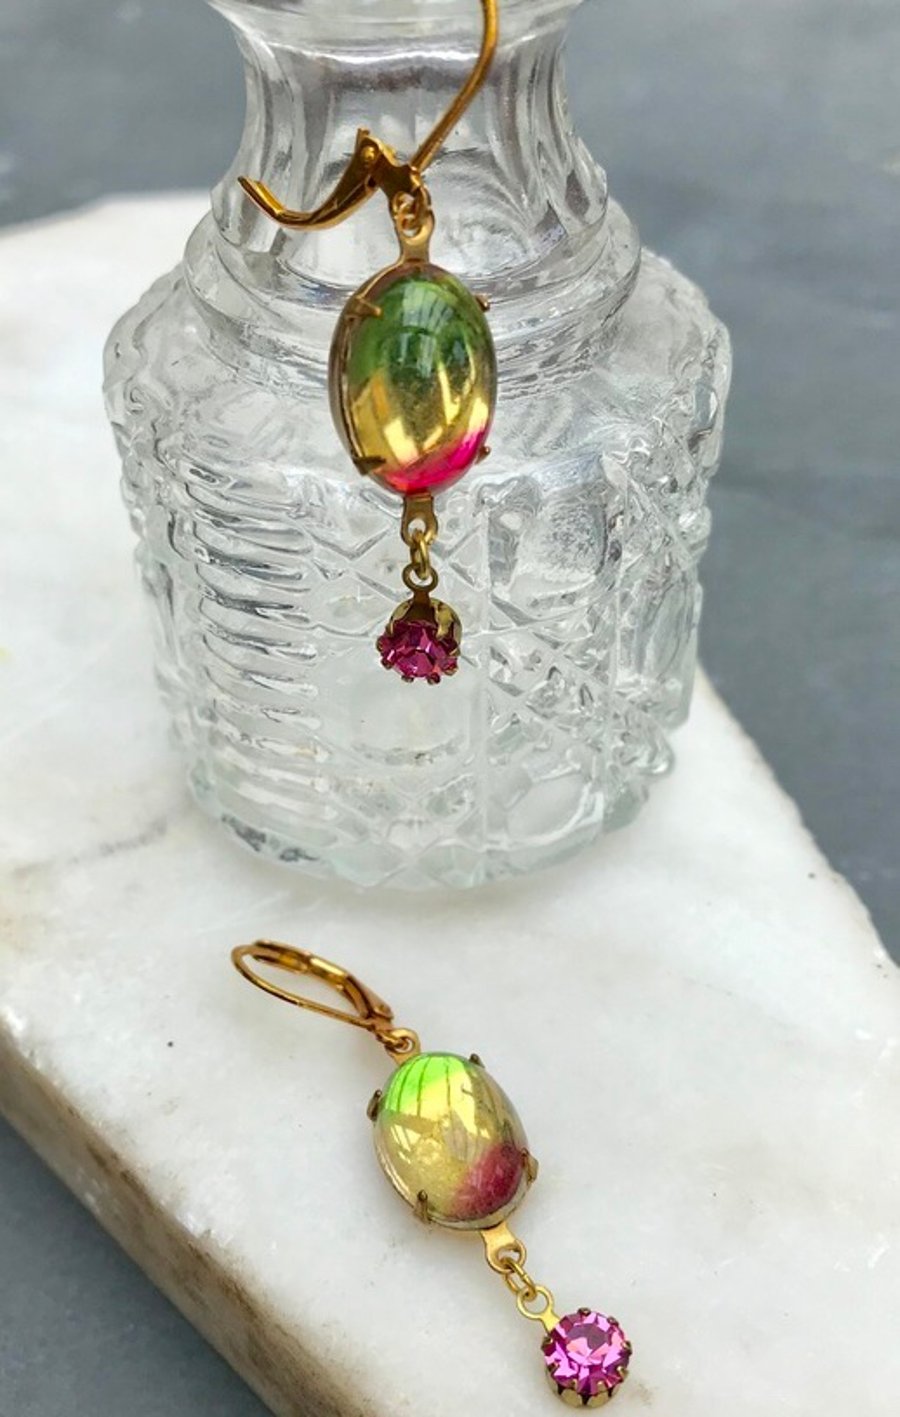  Rainbow glass stone earrings & swarvoski pink round stone